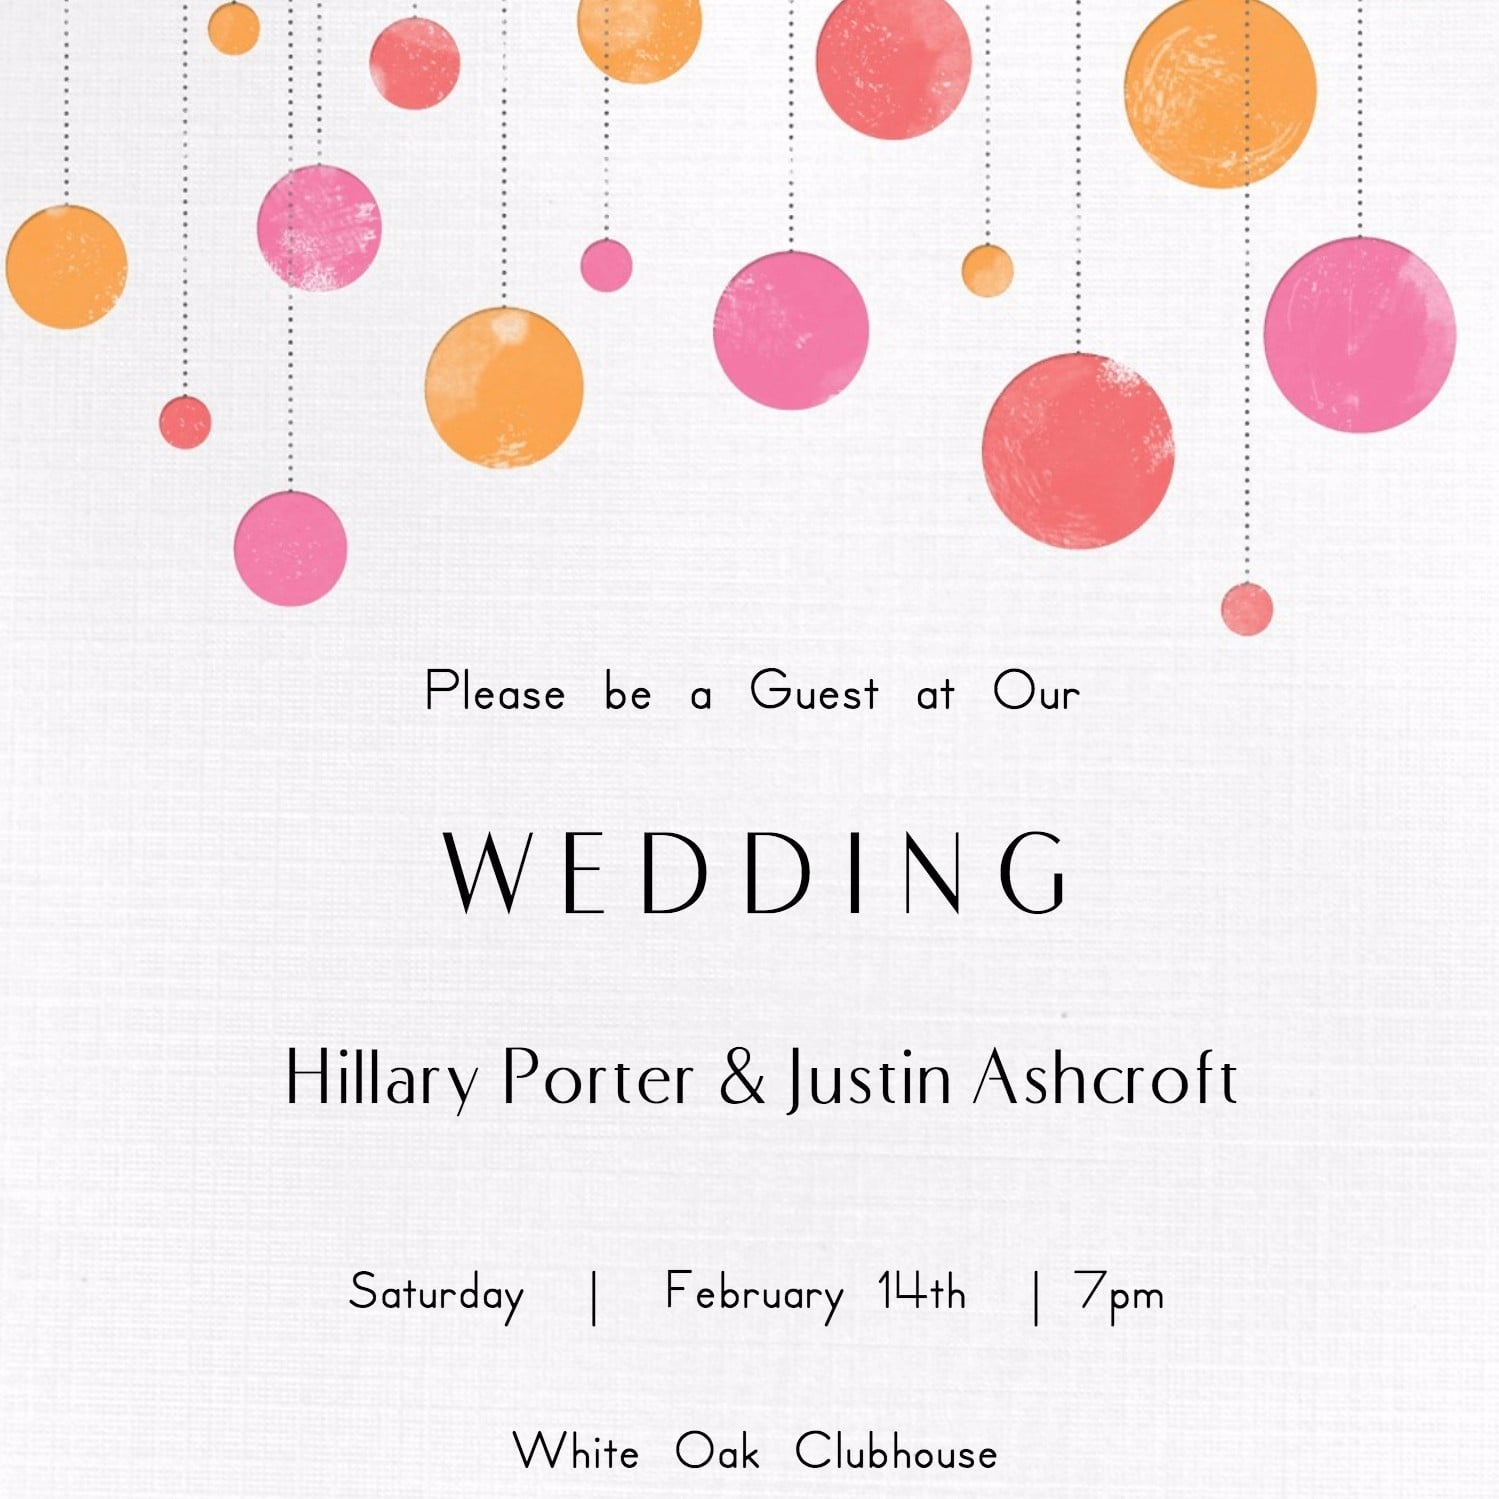 Free Printable Wedding Invitations | Popsugar Smart Living - Free Printable Wedding Invitations With Photo